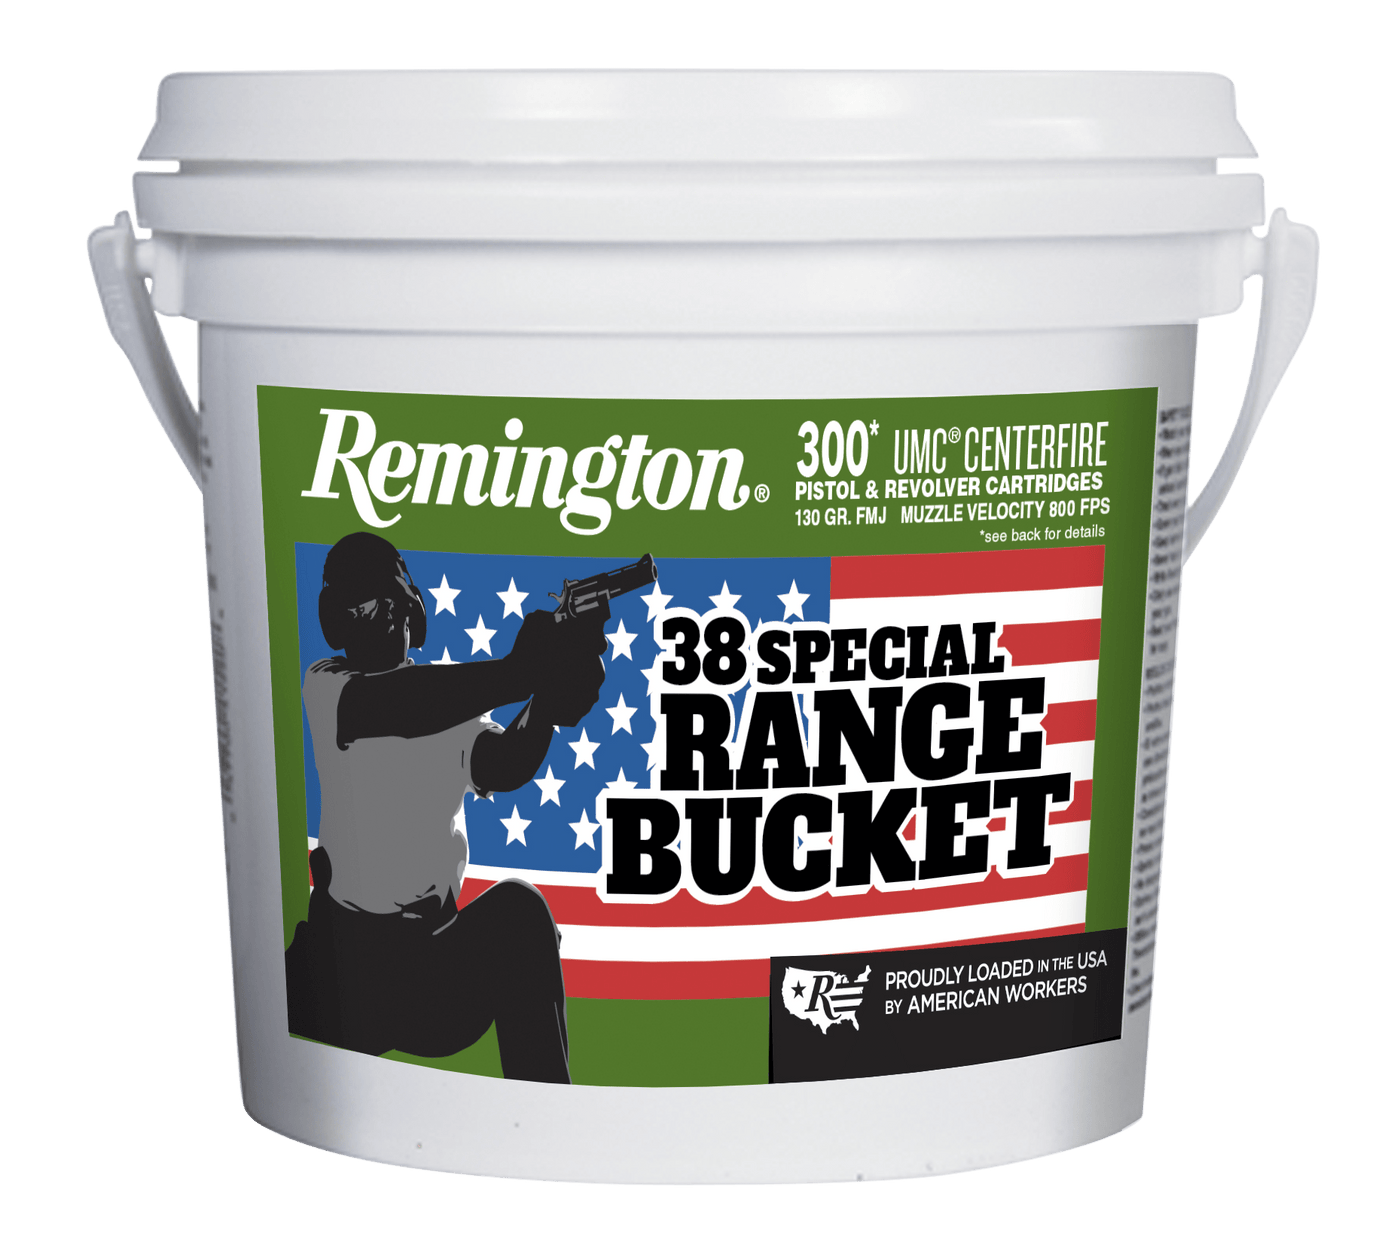 Remington Ammunition Remington Range Bucket Umc Pistol Ammo 38 Spl. 130 Gr. Fmj 300 Rd. Ammo